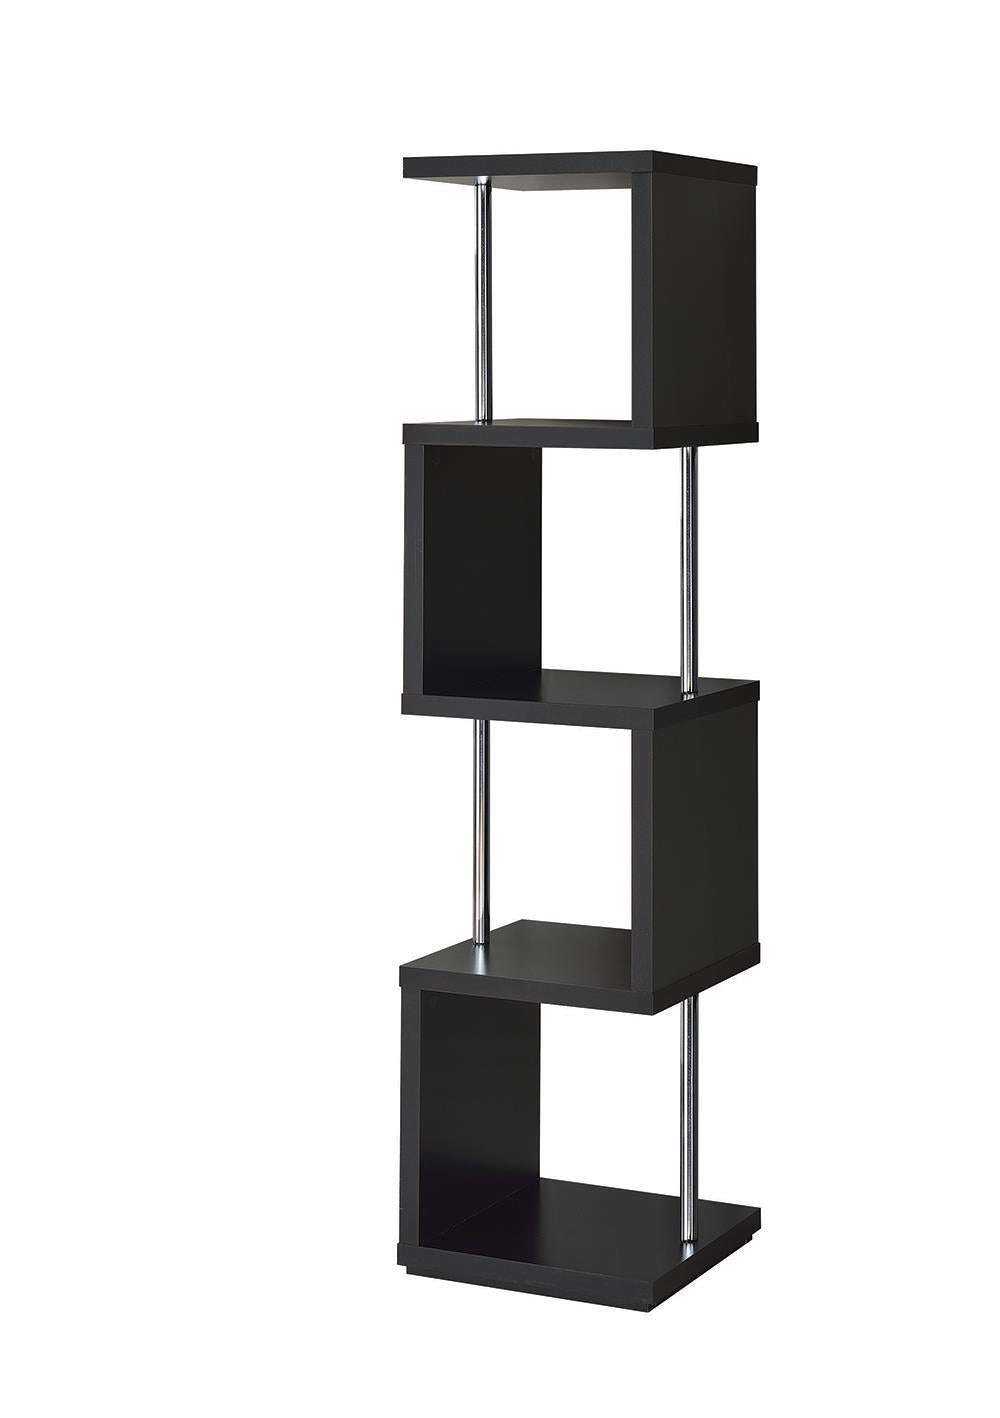 Baxter 4-shelf Bookcase Black and Chrome - Half Price Furniture